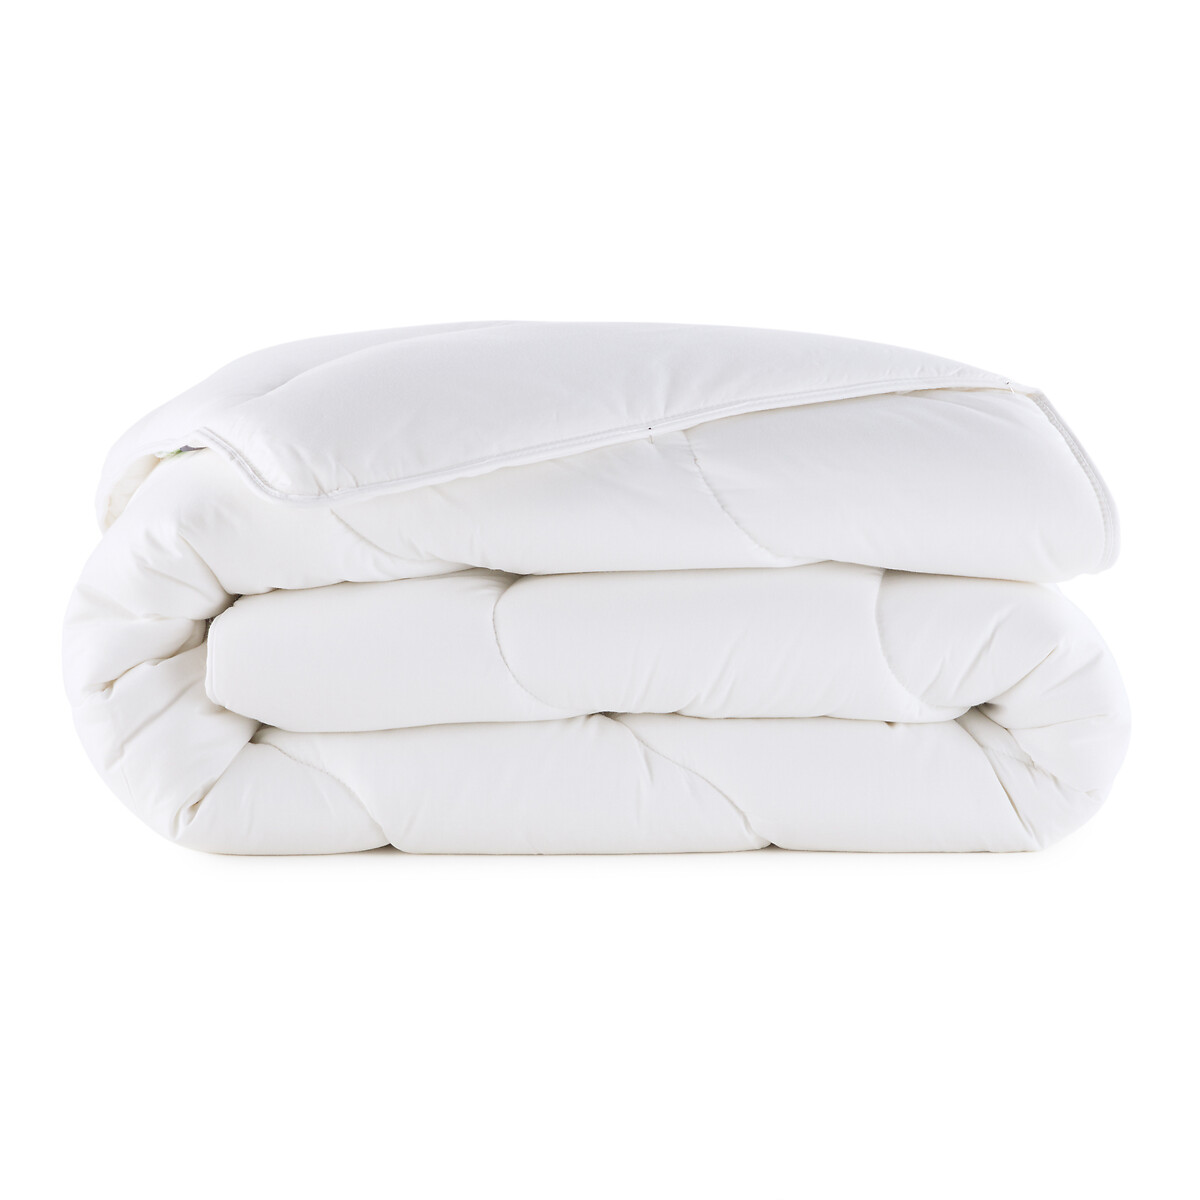 Одеяло La Redoute Синтетическое  гм с обработкой Proneem 260 x 240 см белый, размер 260 x 240 см - фото 2